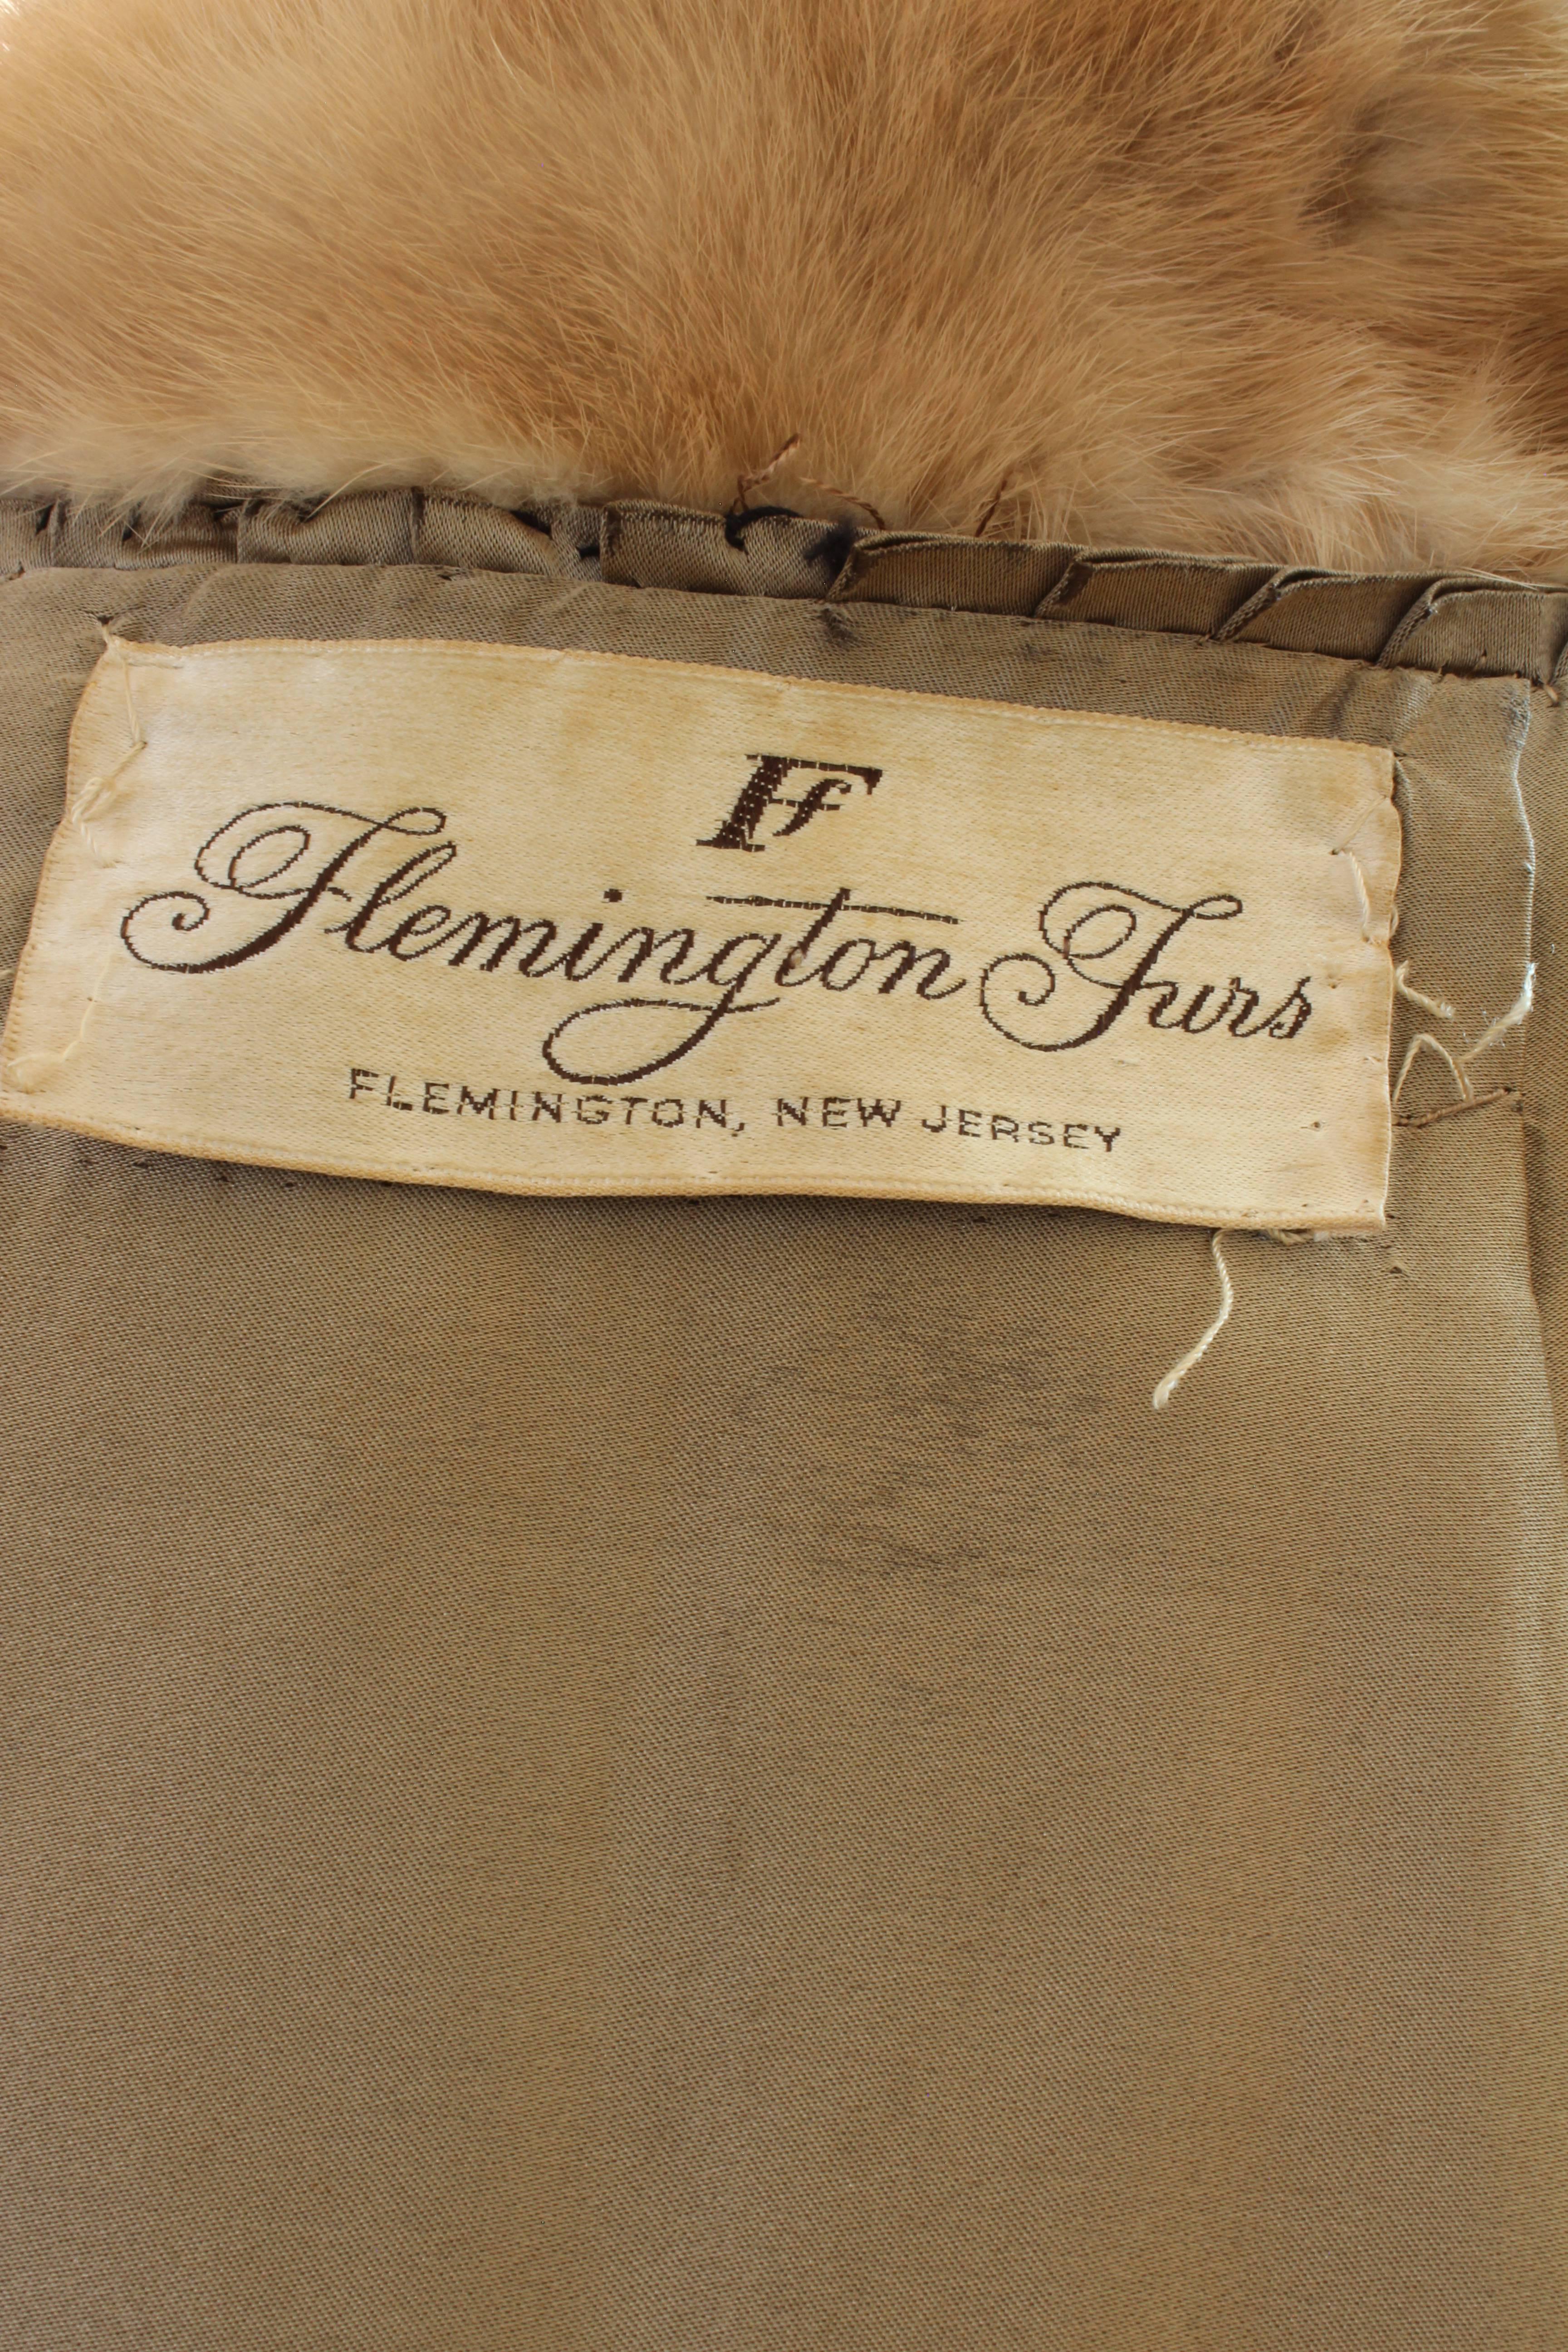 Flemington Furs NJ Blonde Mink Jacket with Stand Up Collar, circa 1960s  1